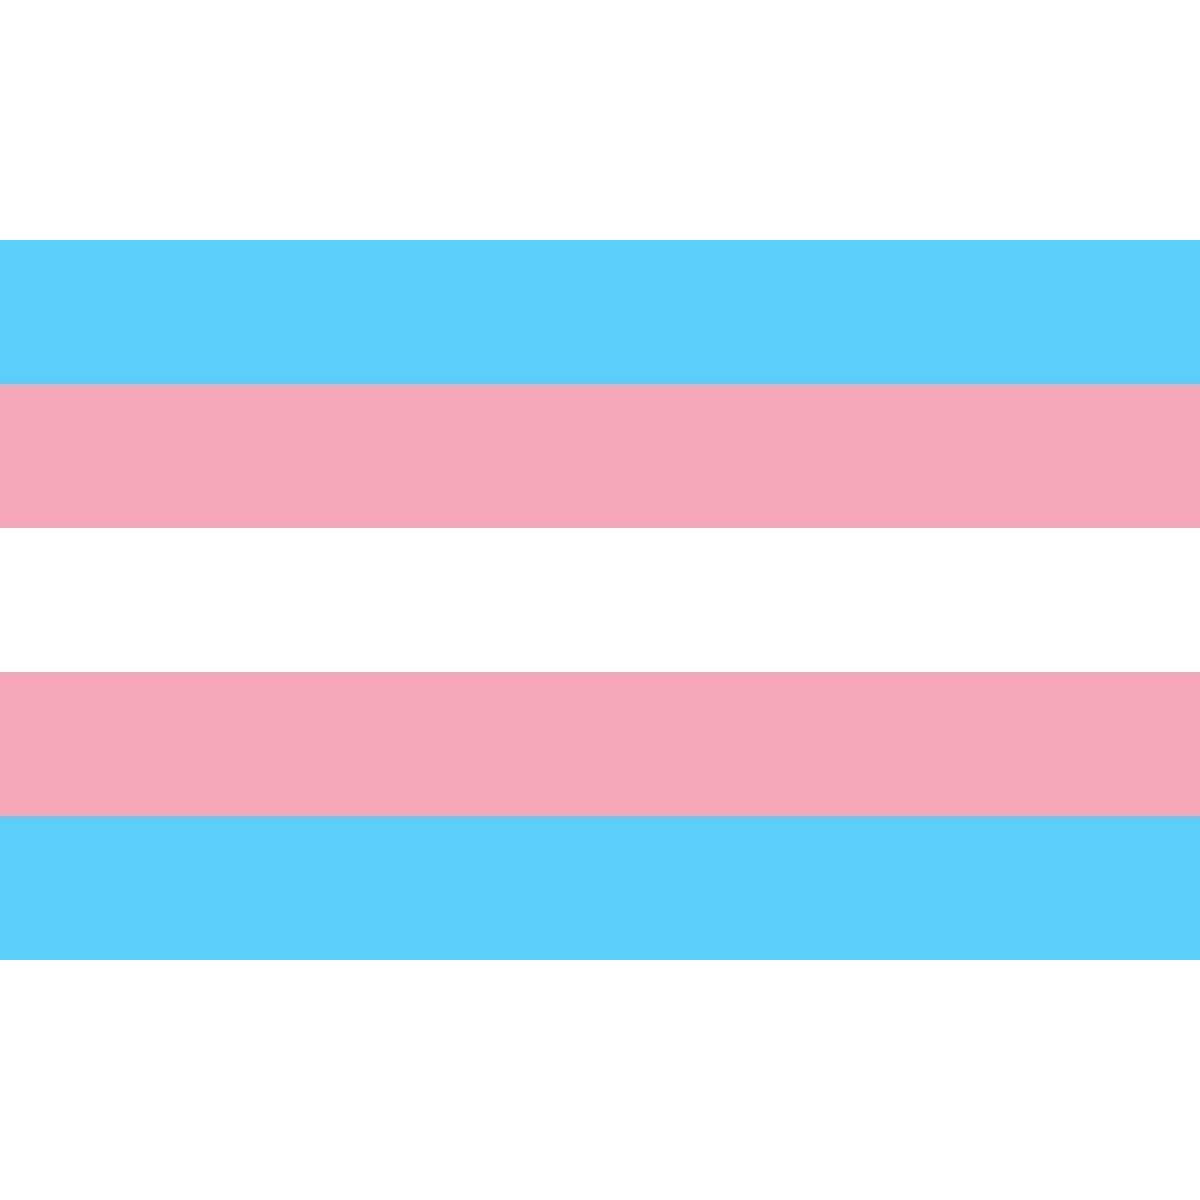 5ft x 3ft Transgender Flag Lesbian Love Gender Diversity Trans/LGBTQ/Pansexual/Non-Binary/Genderfluid Celebration Support - image 1